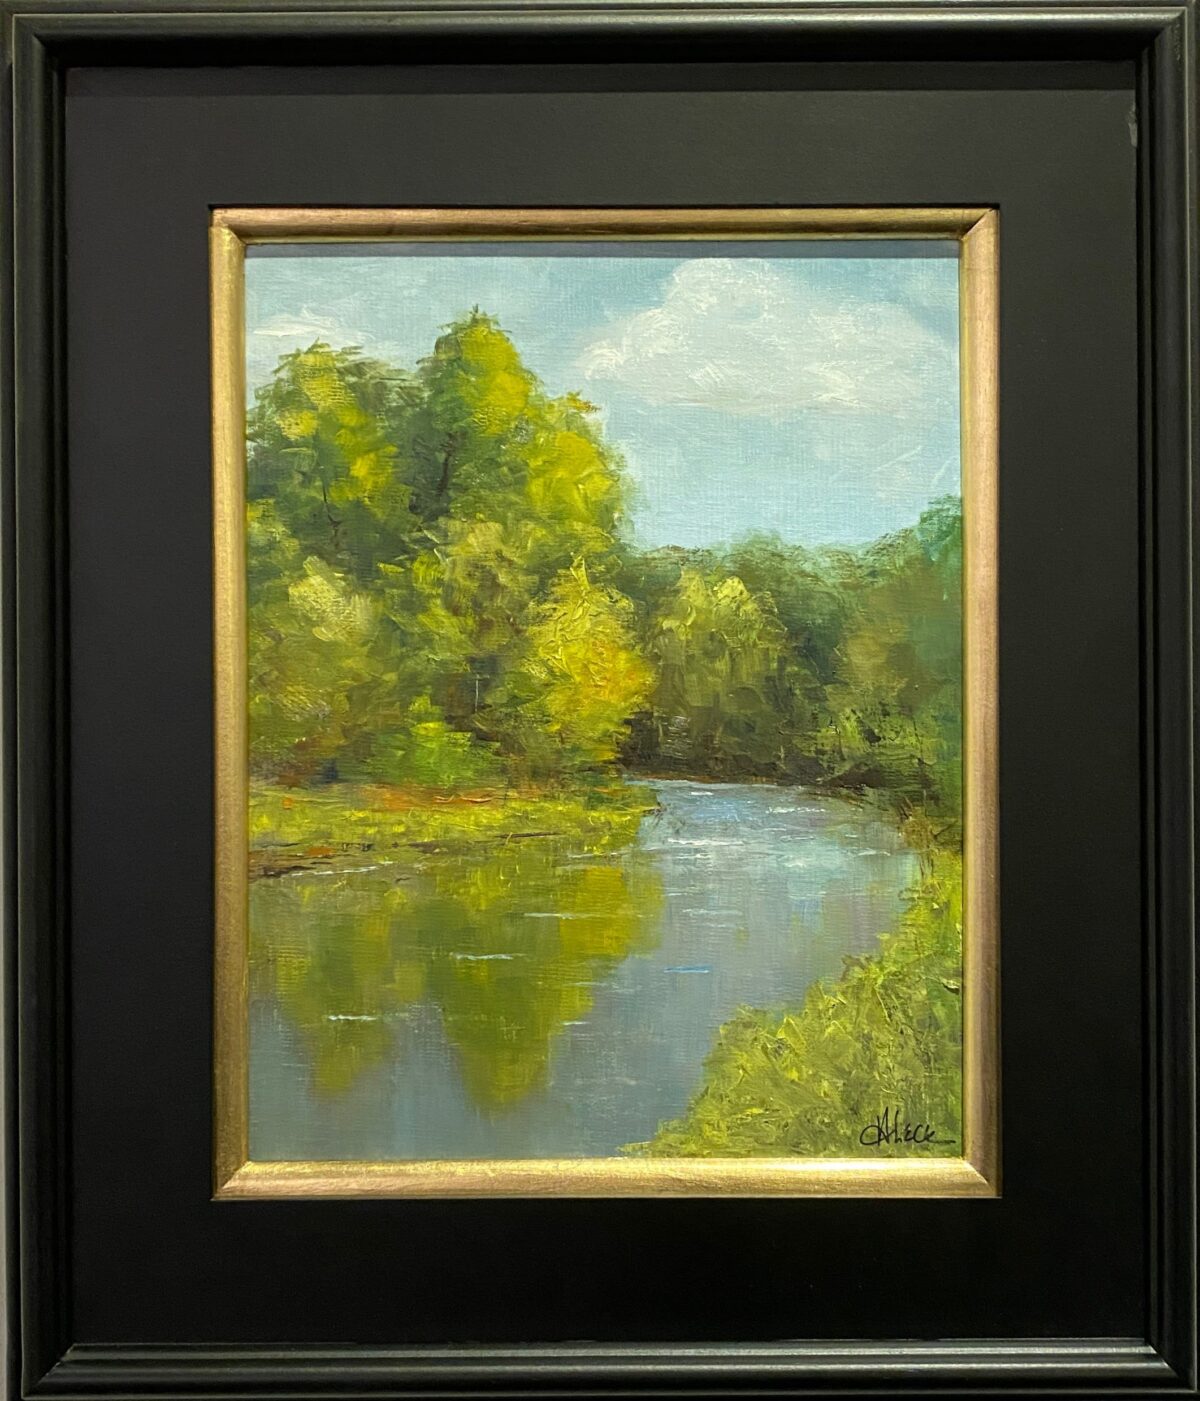 225 - Fall Landscape - 9x12 - Landscape - $450